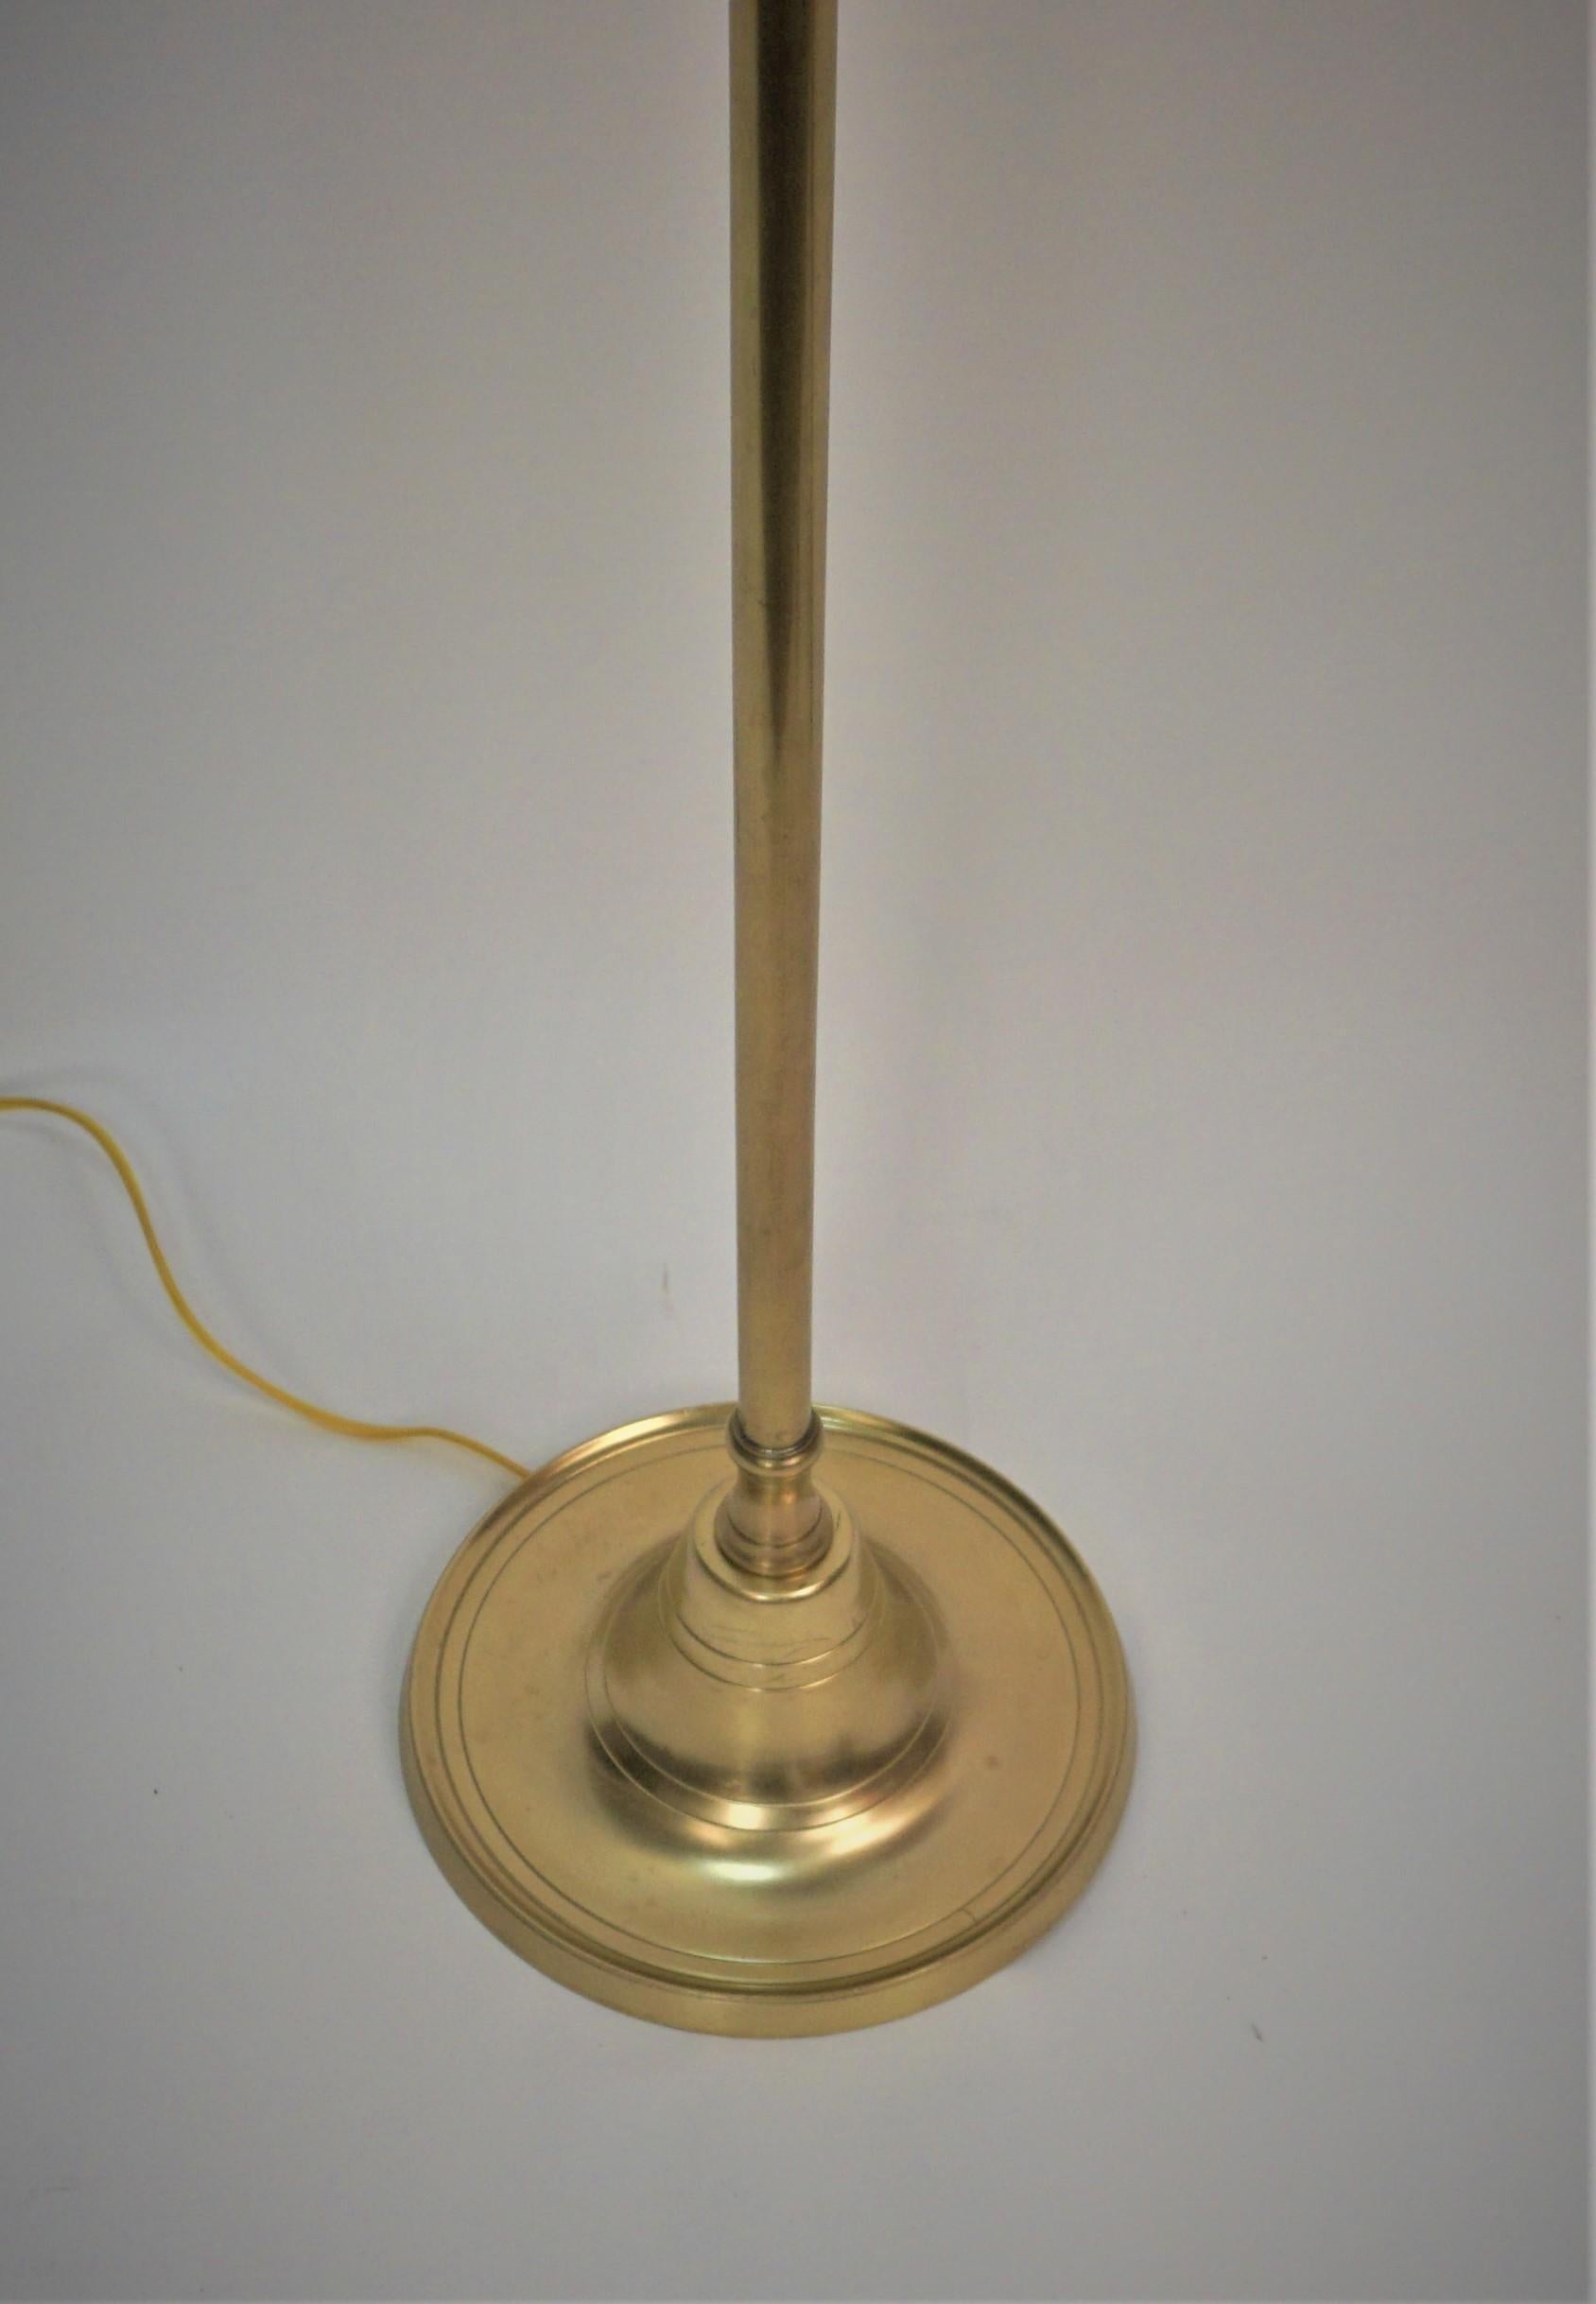 French 1950's Swing arm adjustable height floor lamp.
Measurement: maximum height 62